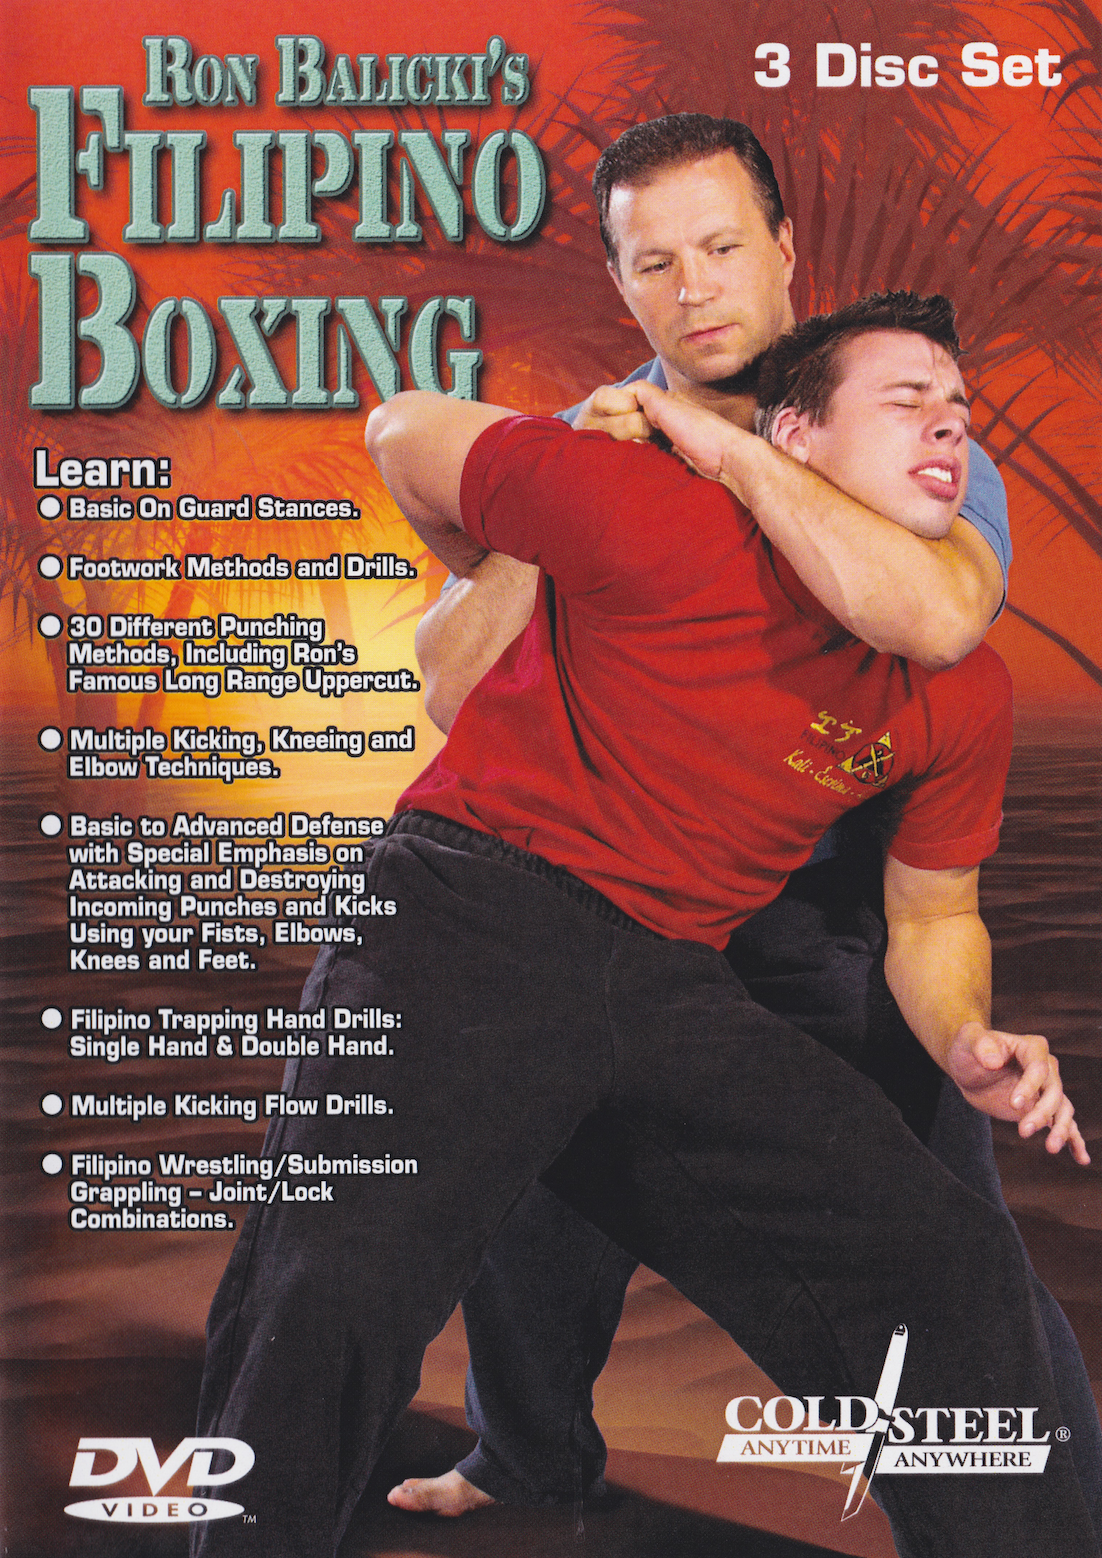 Filipino Boxing 3 DVD Set by Ron Balicki (Preowned)